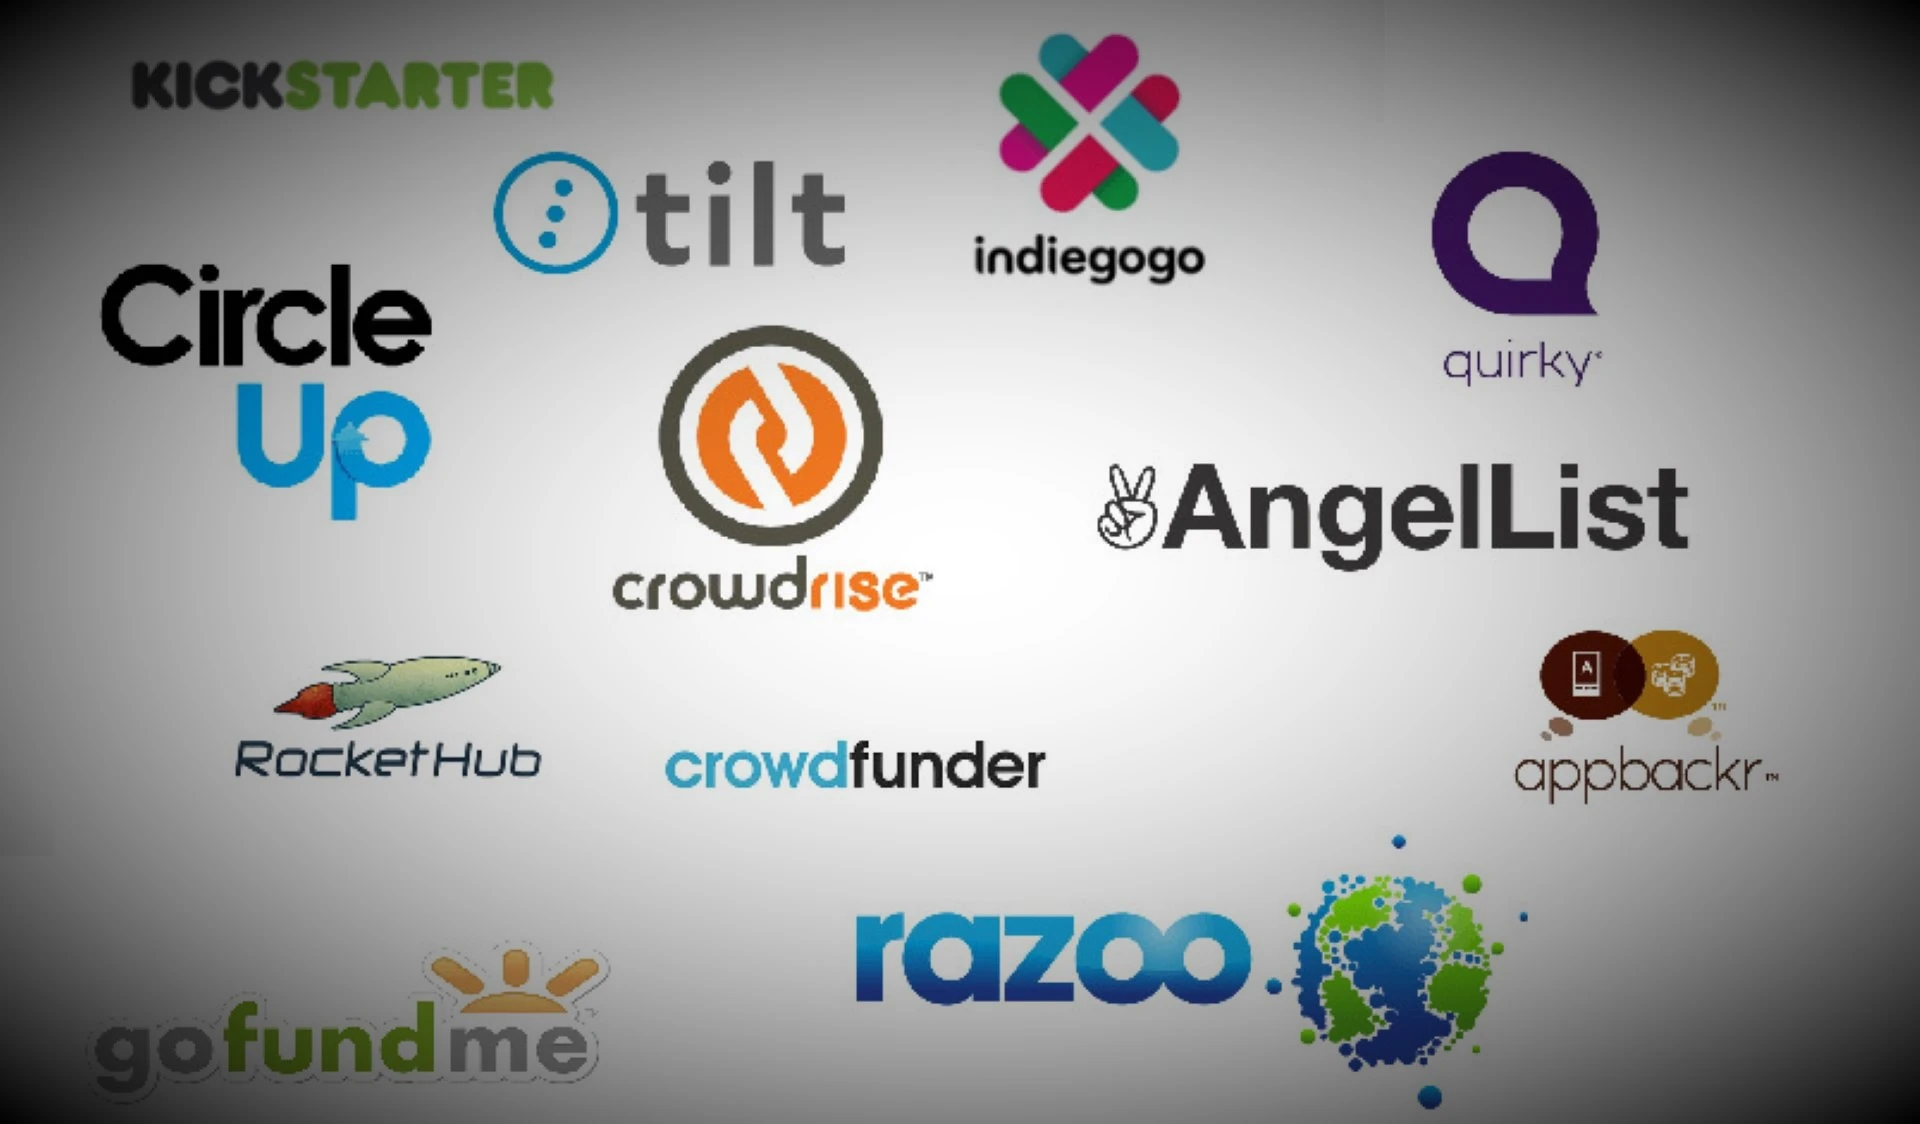 crowdfunding app model3 like crowdfunder, circleup